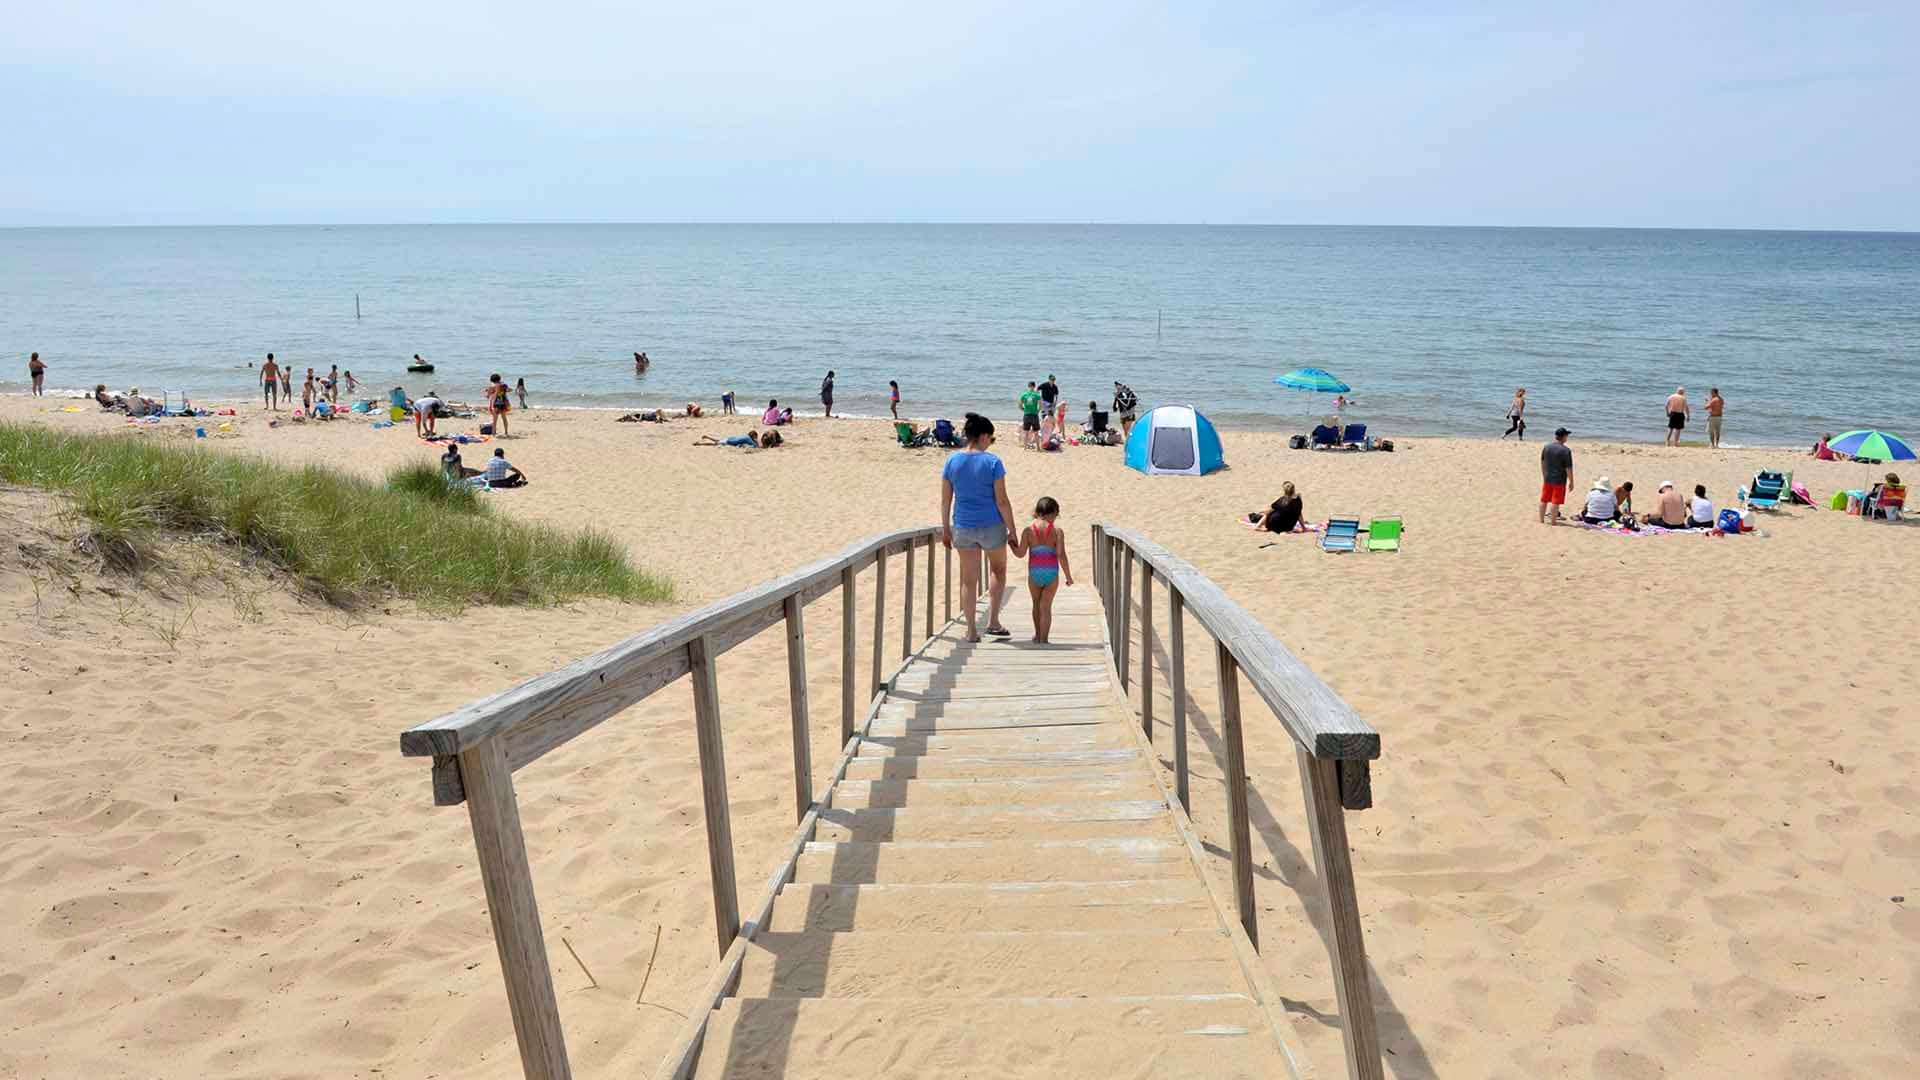 Oval Beach in Saugatuck, Michigan, draws crowds, especially in summer.